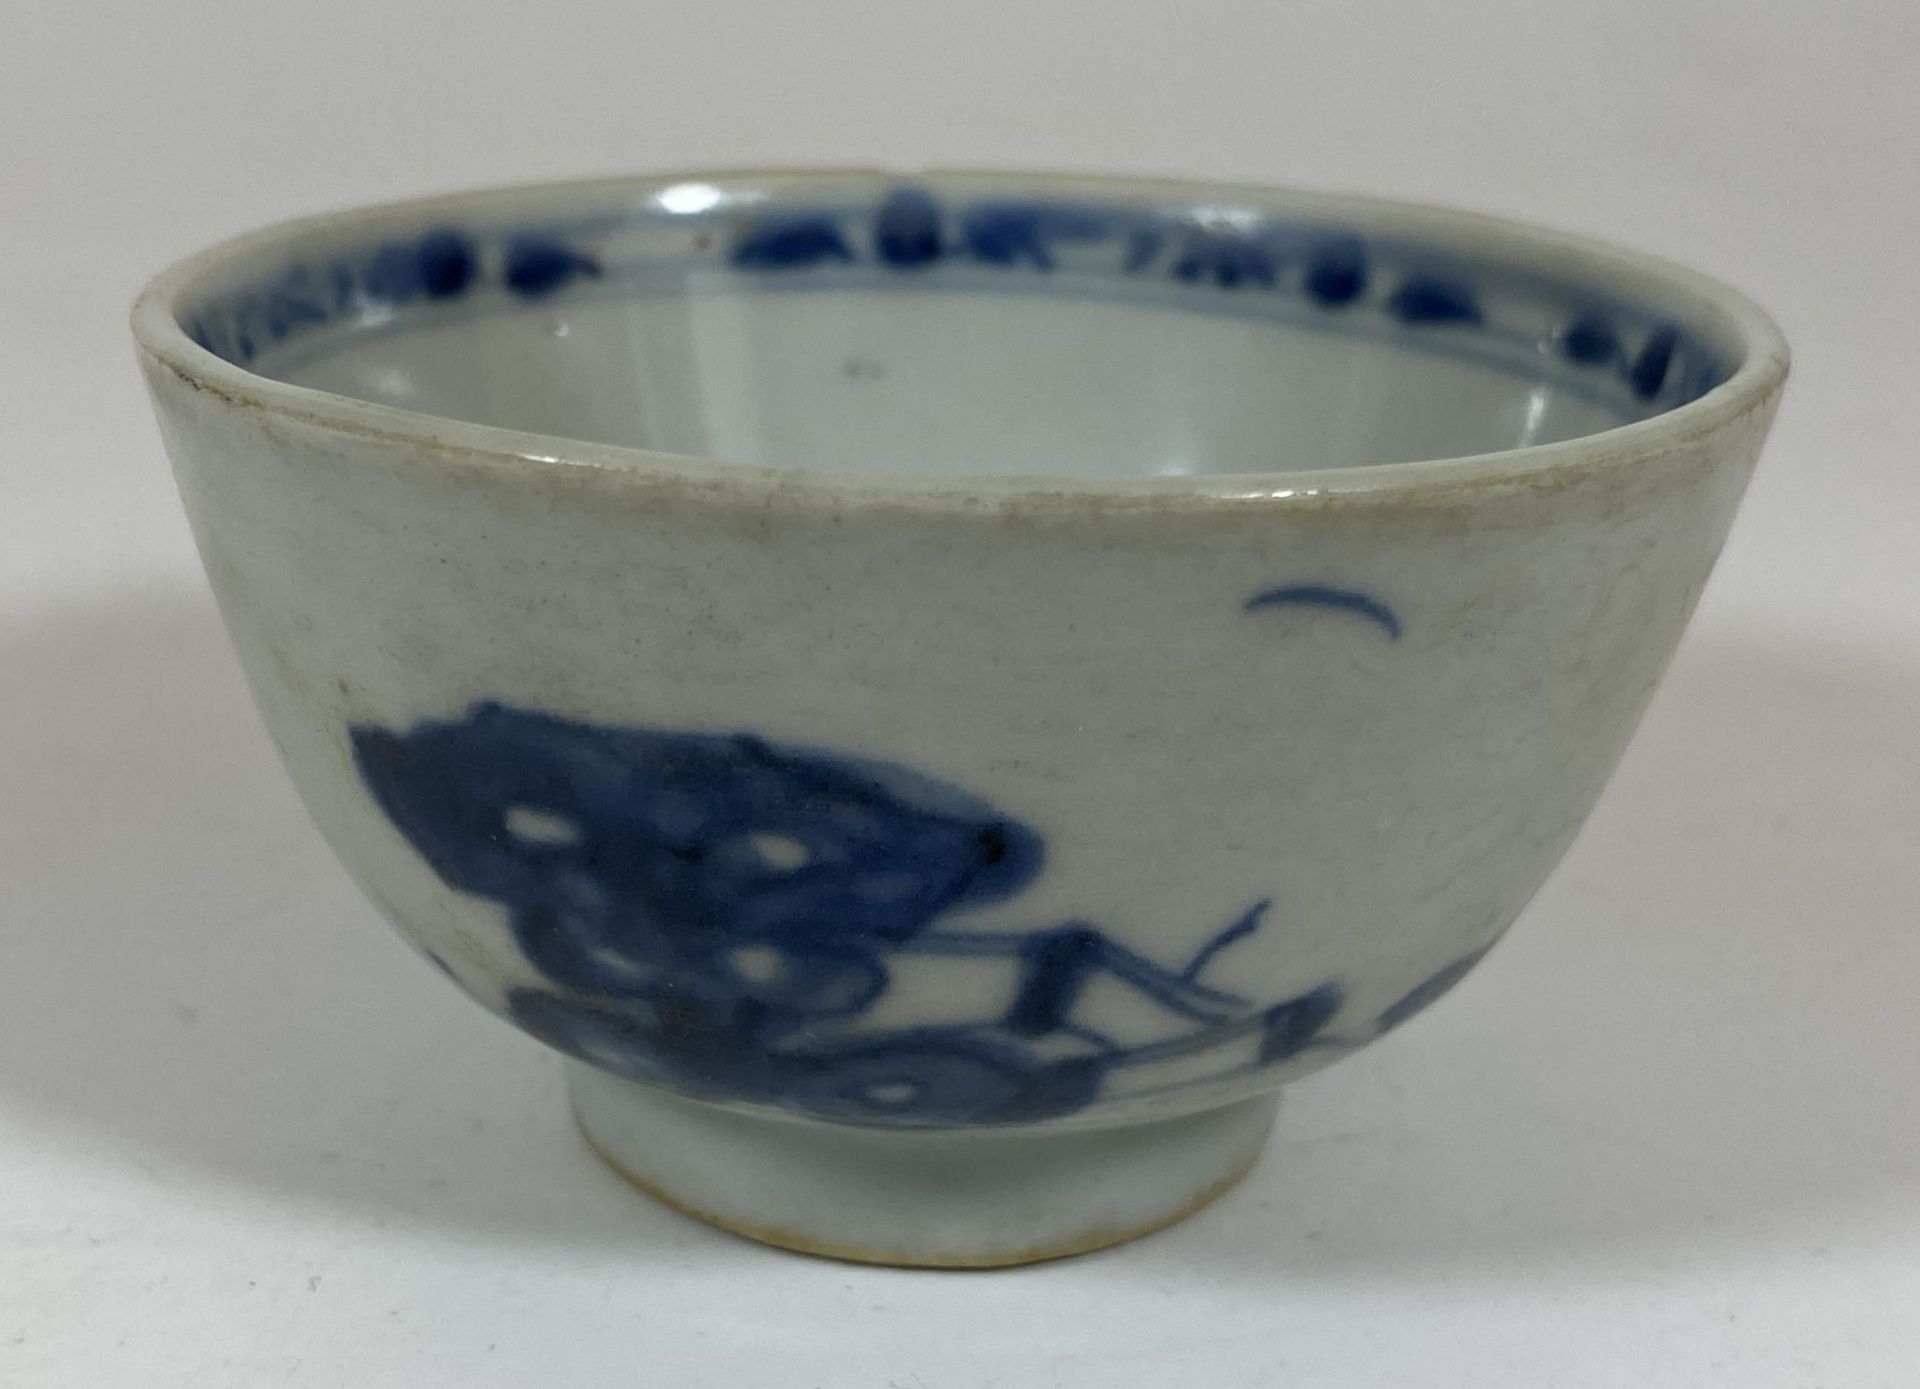 AN 18TH CENTURY CHINESE BLUE AND WHITE PORCELAIN TEA BOWL, DIAMETER 7CM